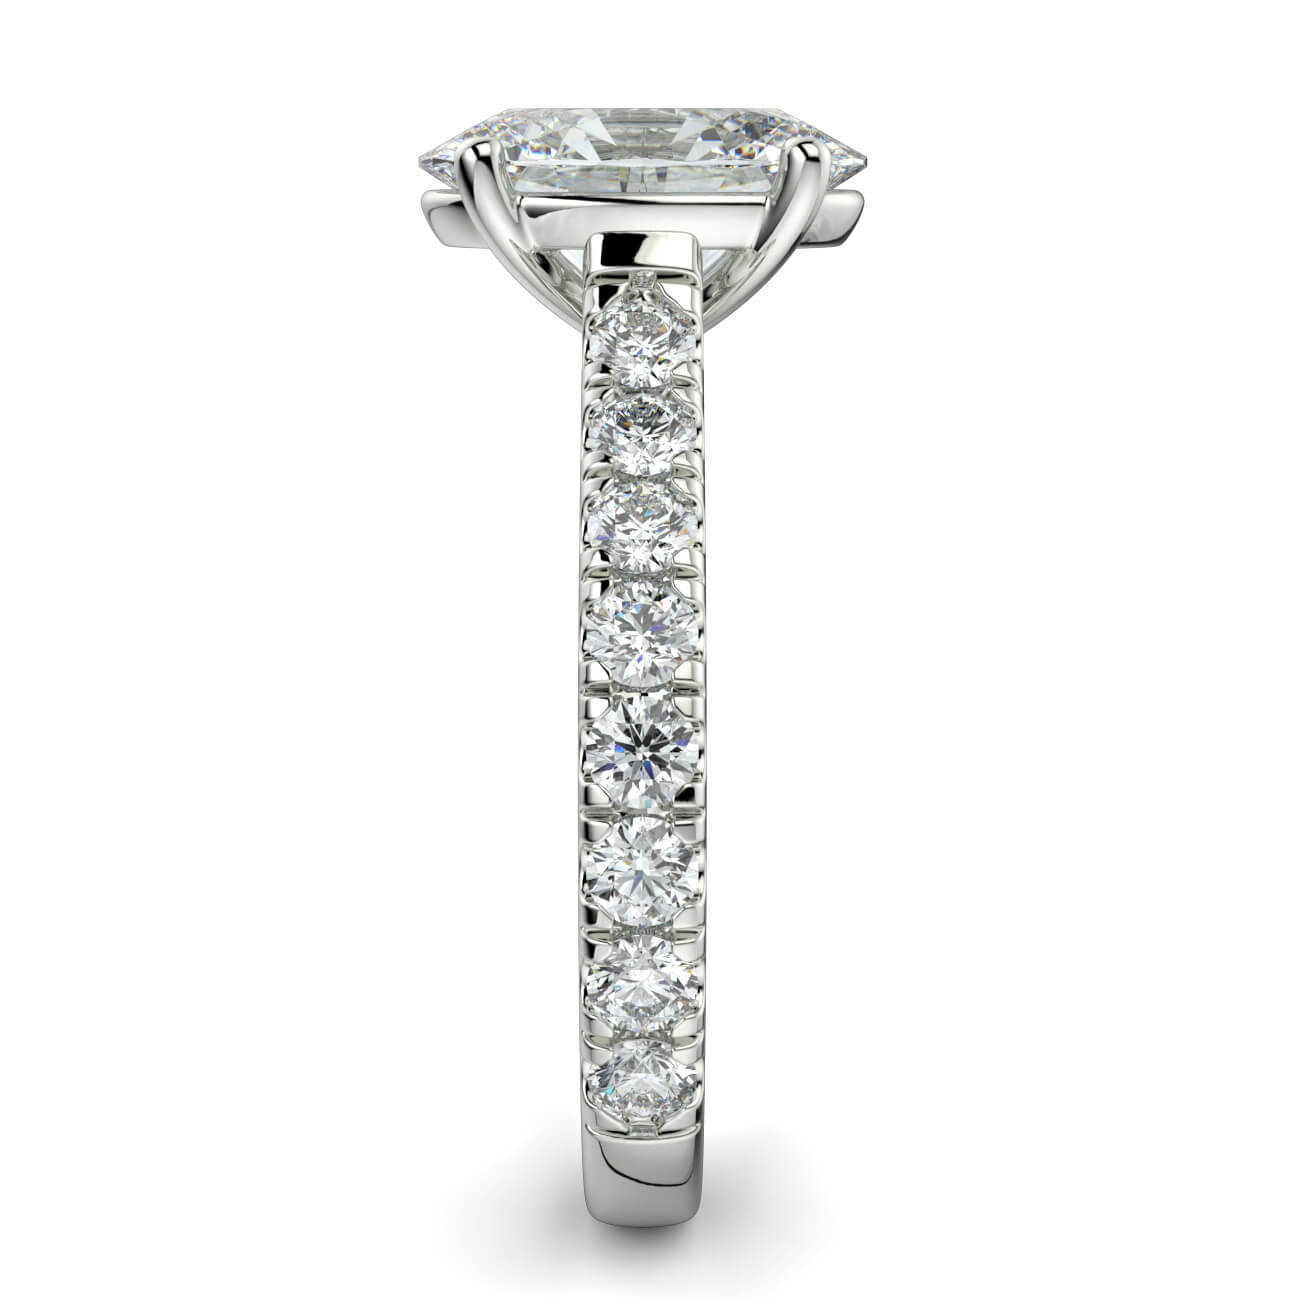 Prestige Oval Cut Diamond Engagement Ring In 18k White Gold – Australian Diamond Network